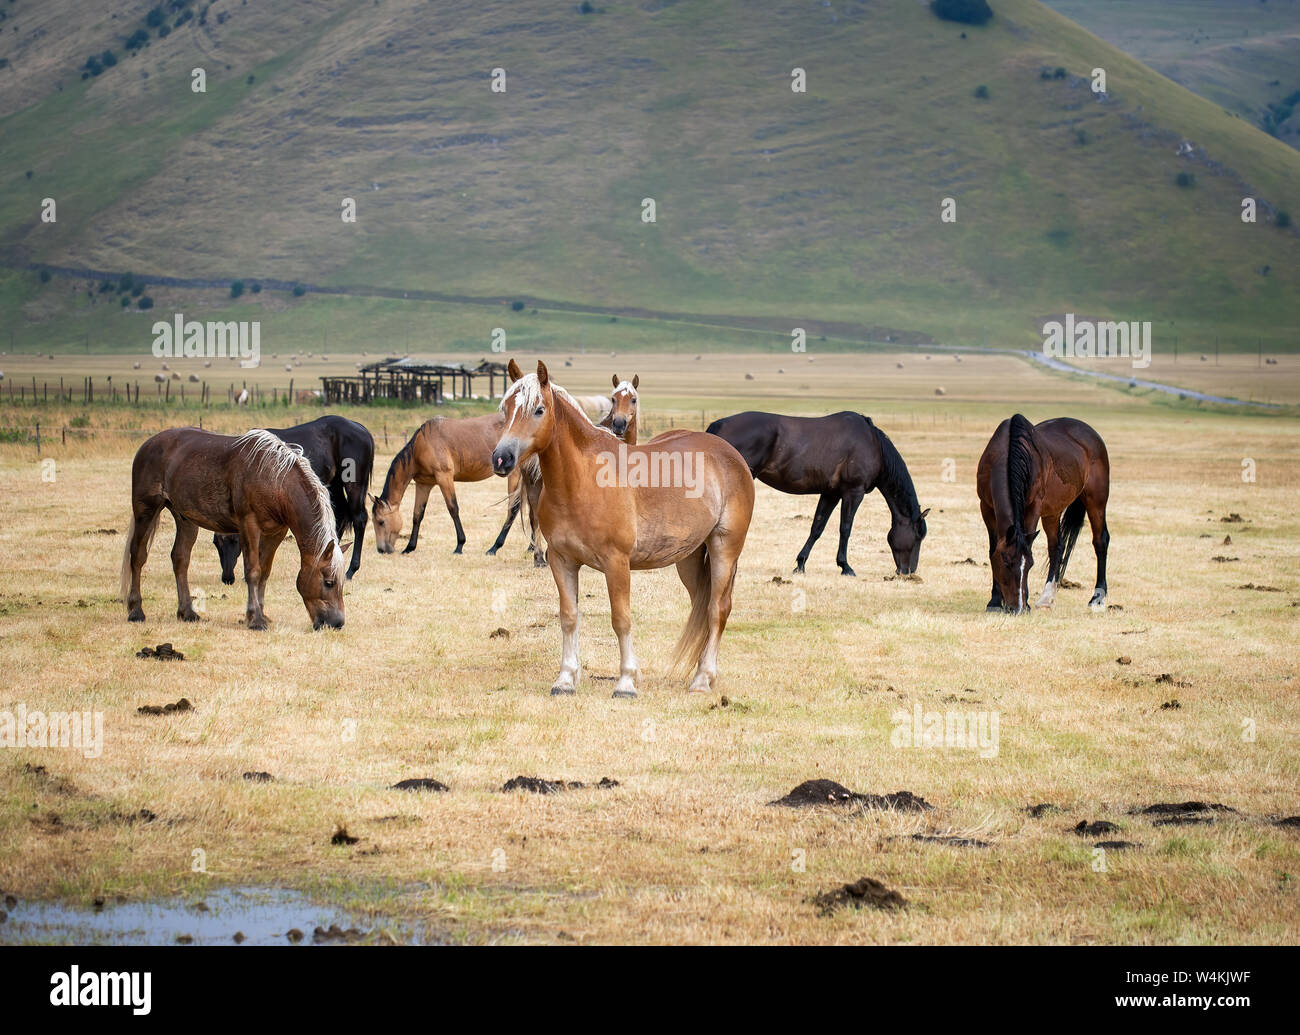 Horses in Castelluccio di Norcia, in Umbria, Italy. Riding is a popular tourist activity in the area. Stock Photo